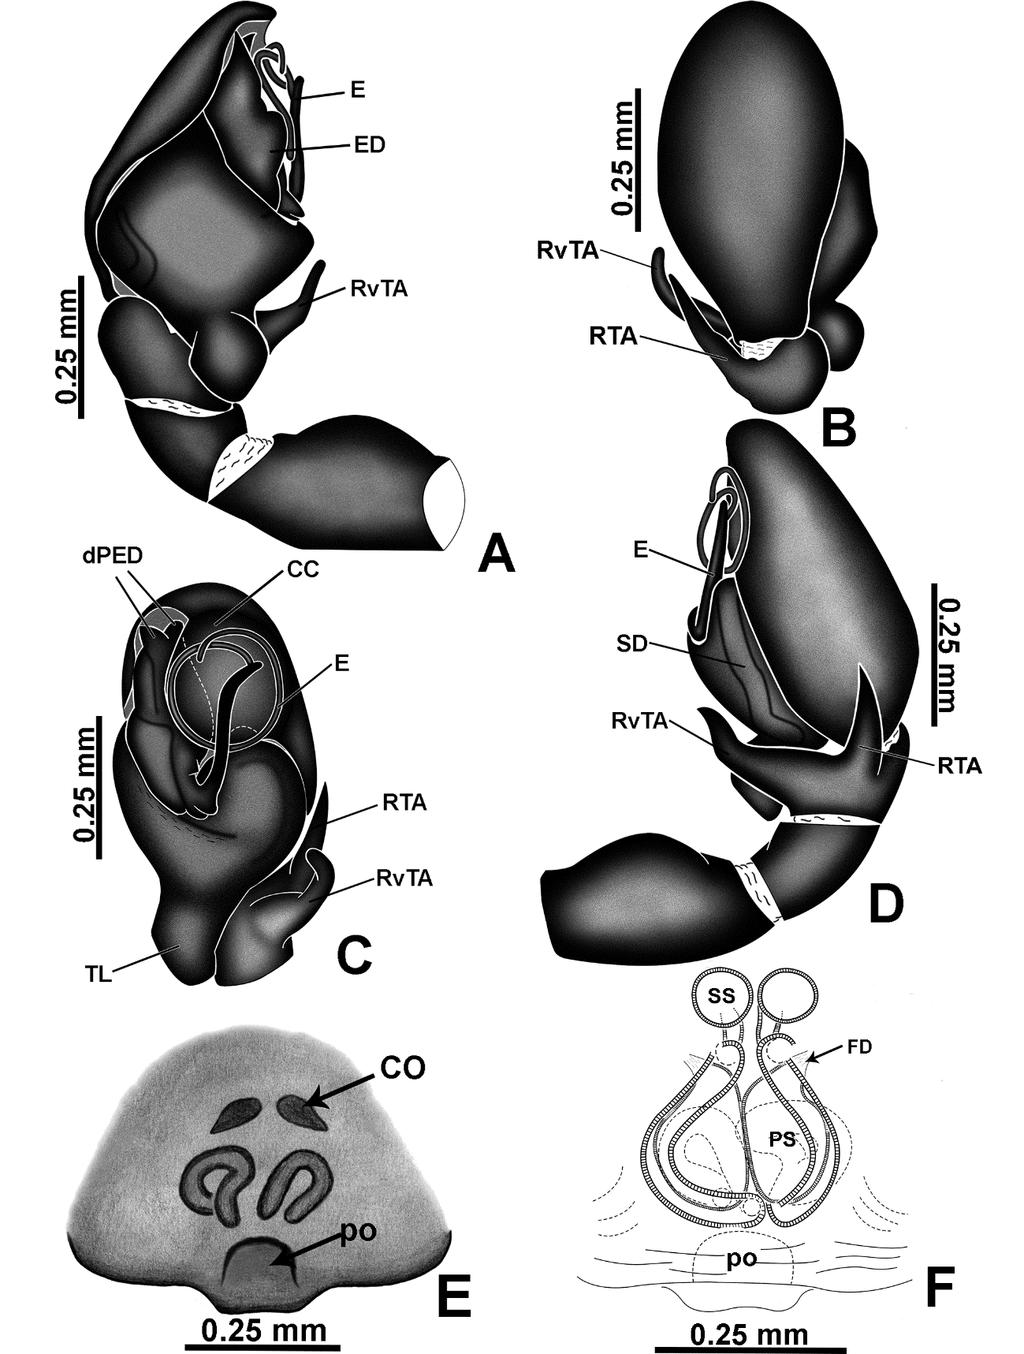 48 FIGURE 21. Amphidraus bifidus sp. nov. A male palp, prolateral view; B same, dorsal view; C same, ventral view; D same, retrolateral view; E epygine, ventral view; F Same, cleared, dorsal view.